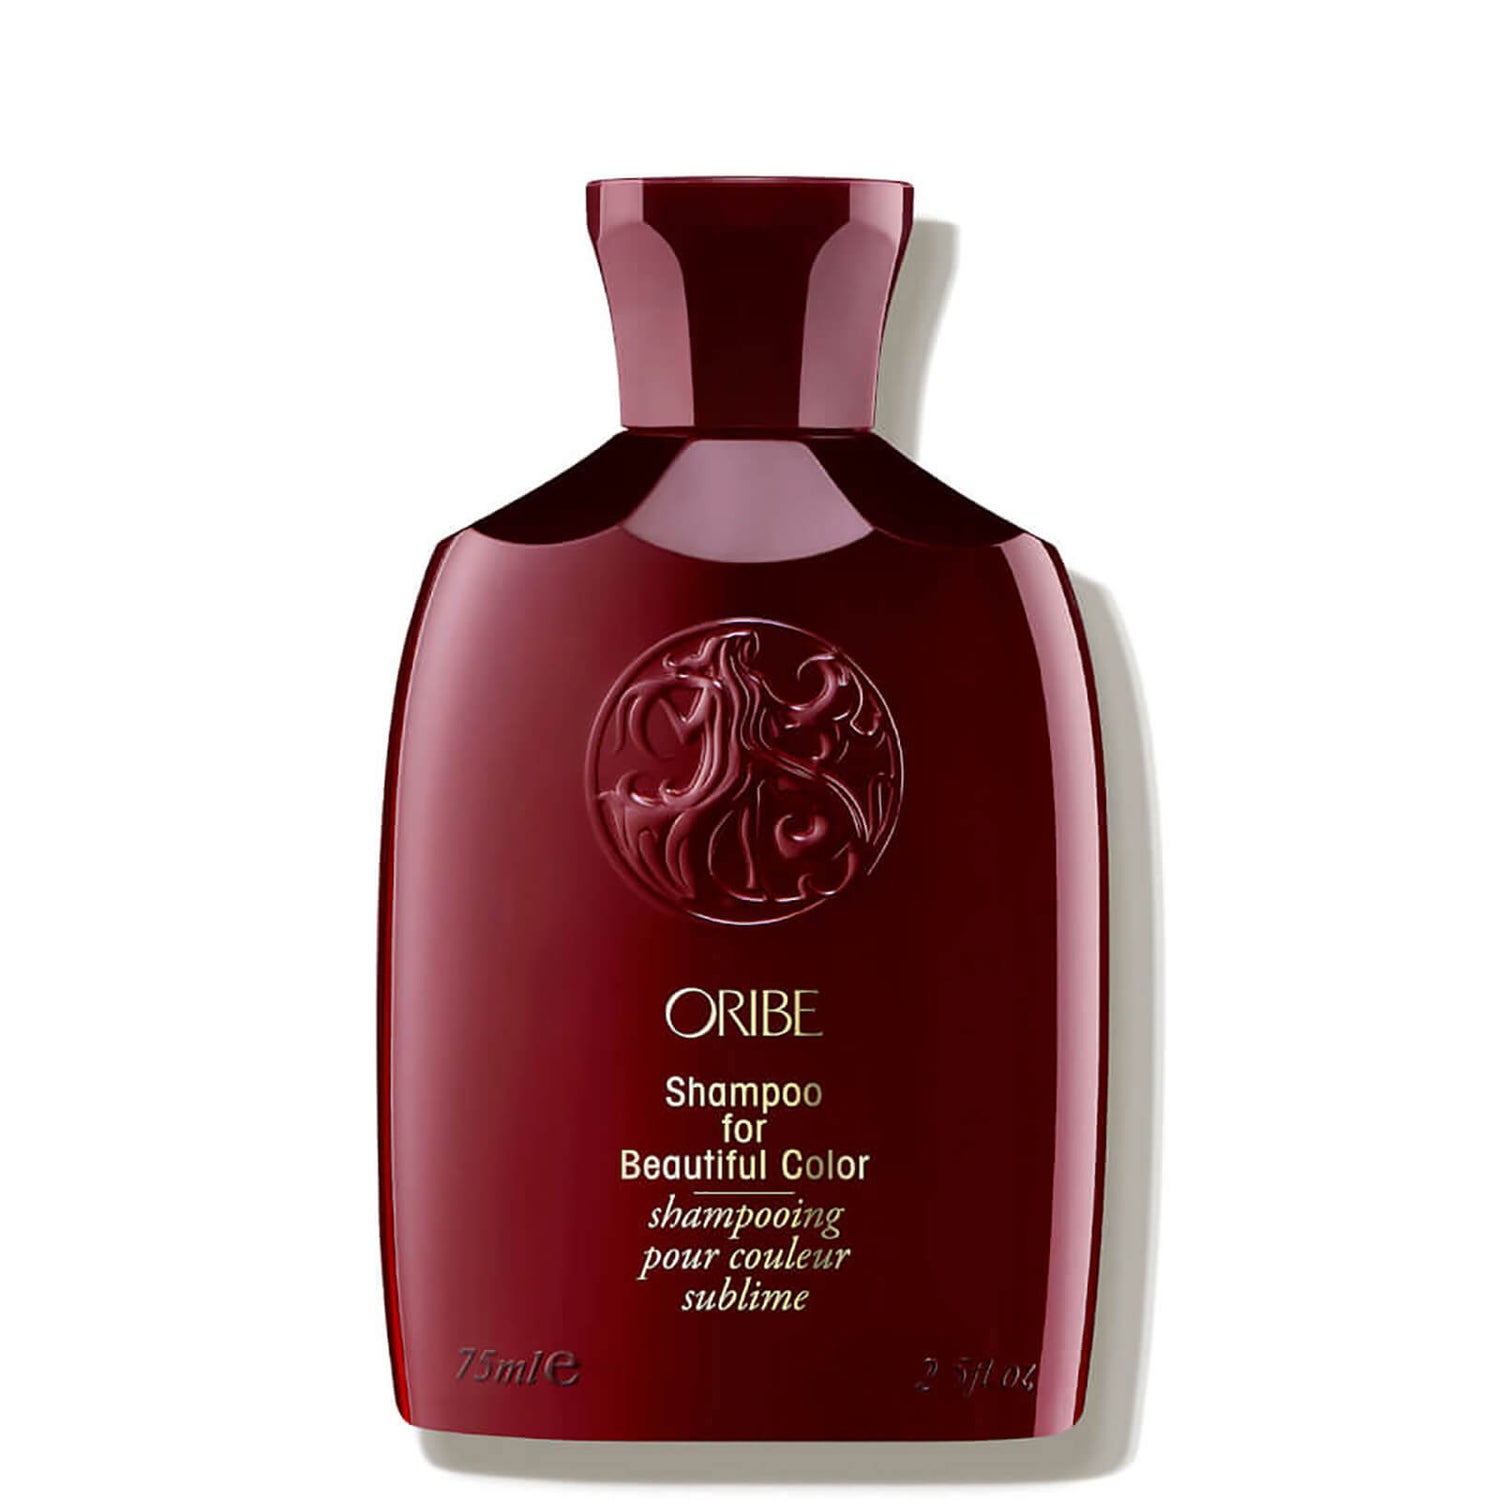 Oribe Shampoo for Beautiful Color - Travel (2.53 fl. oz.)